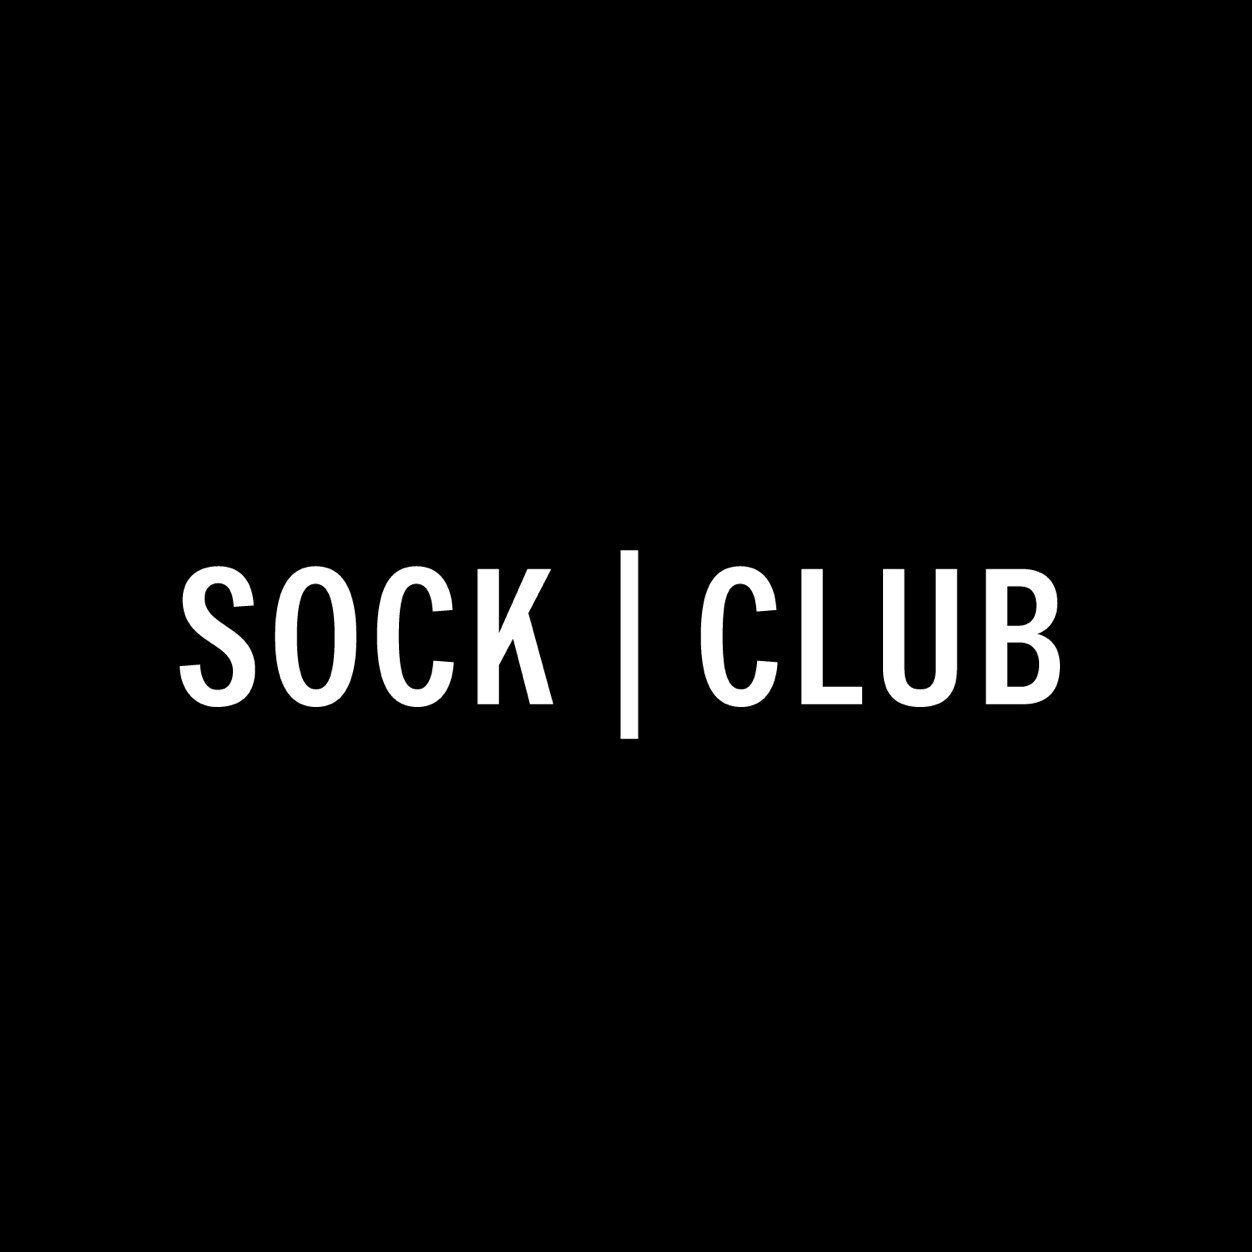 Sock Club logo